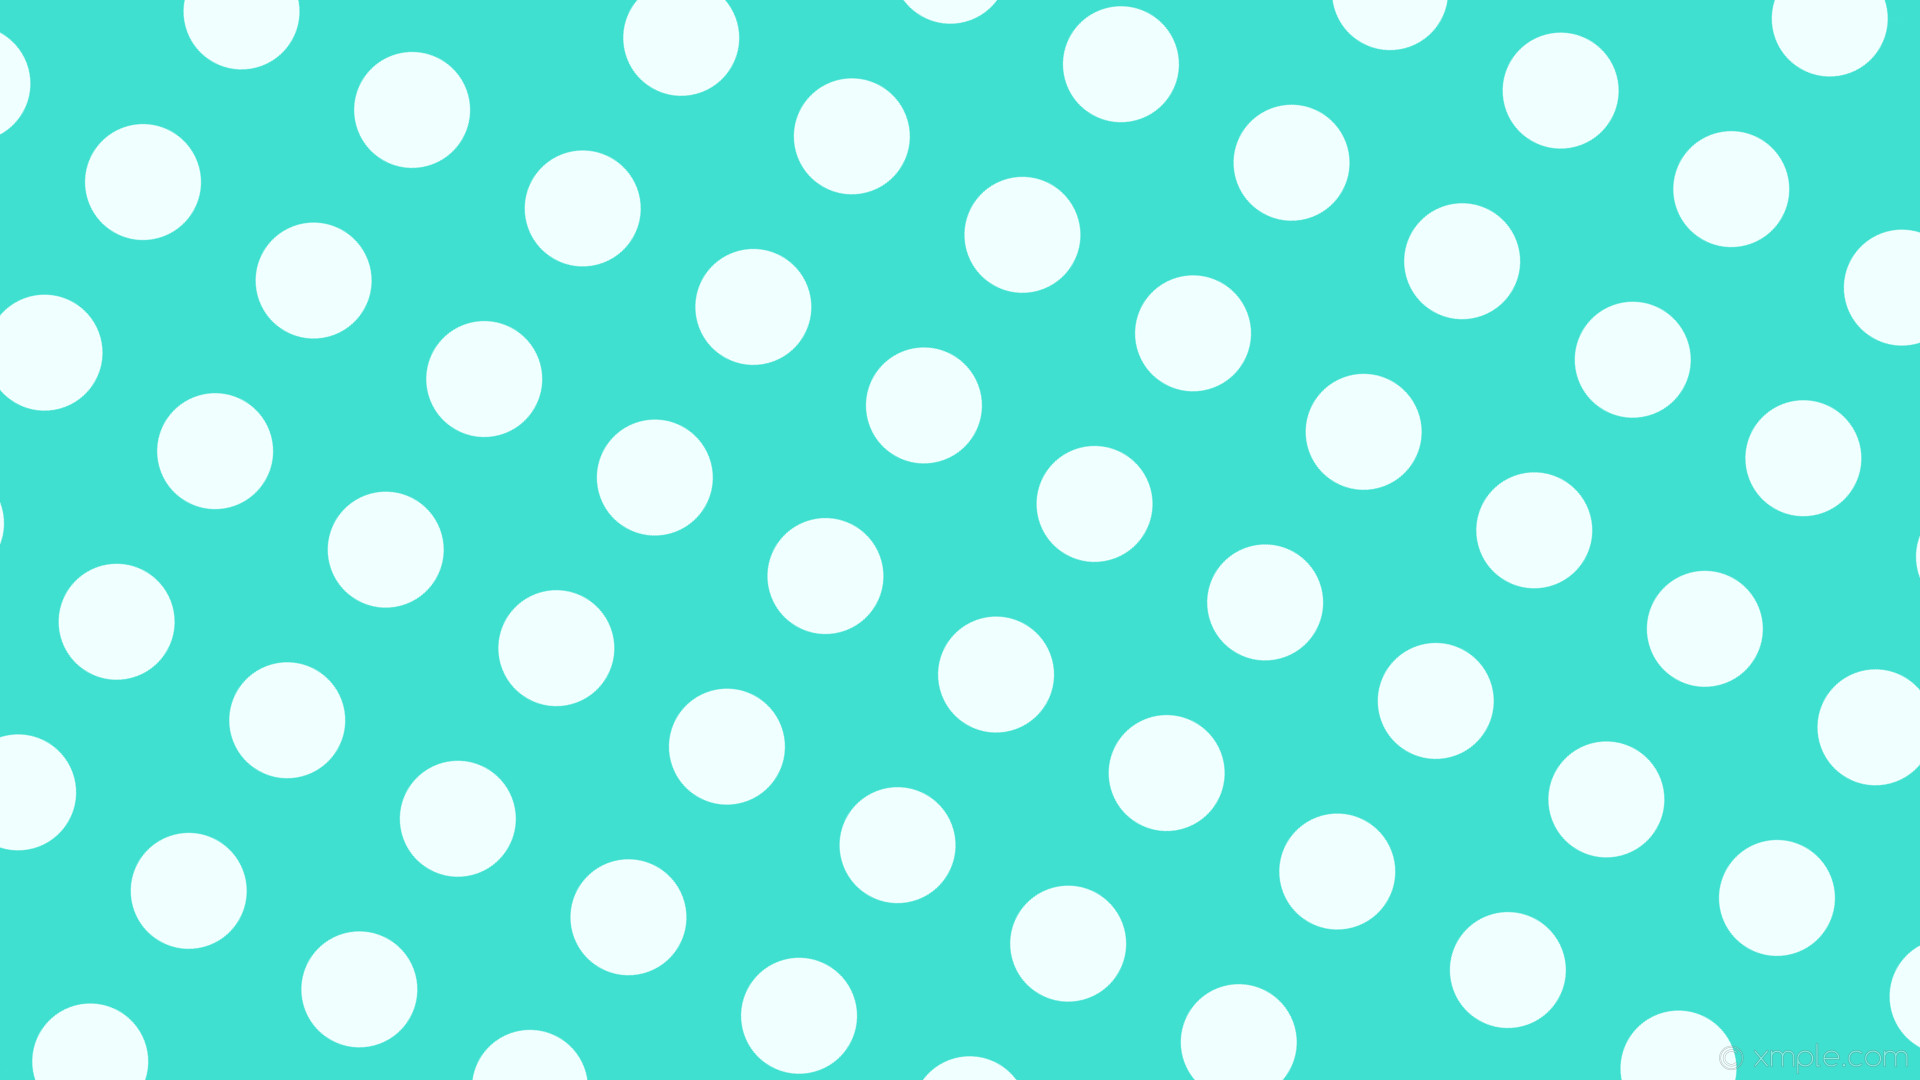 1920x1080 wallpaper polka spots white blue dots turquoise azure #40e0d0 #f0ffff 150Â°  116px 197px